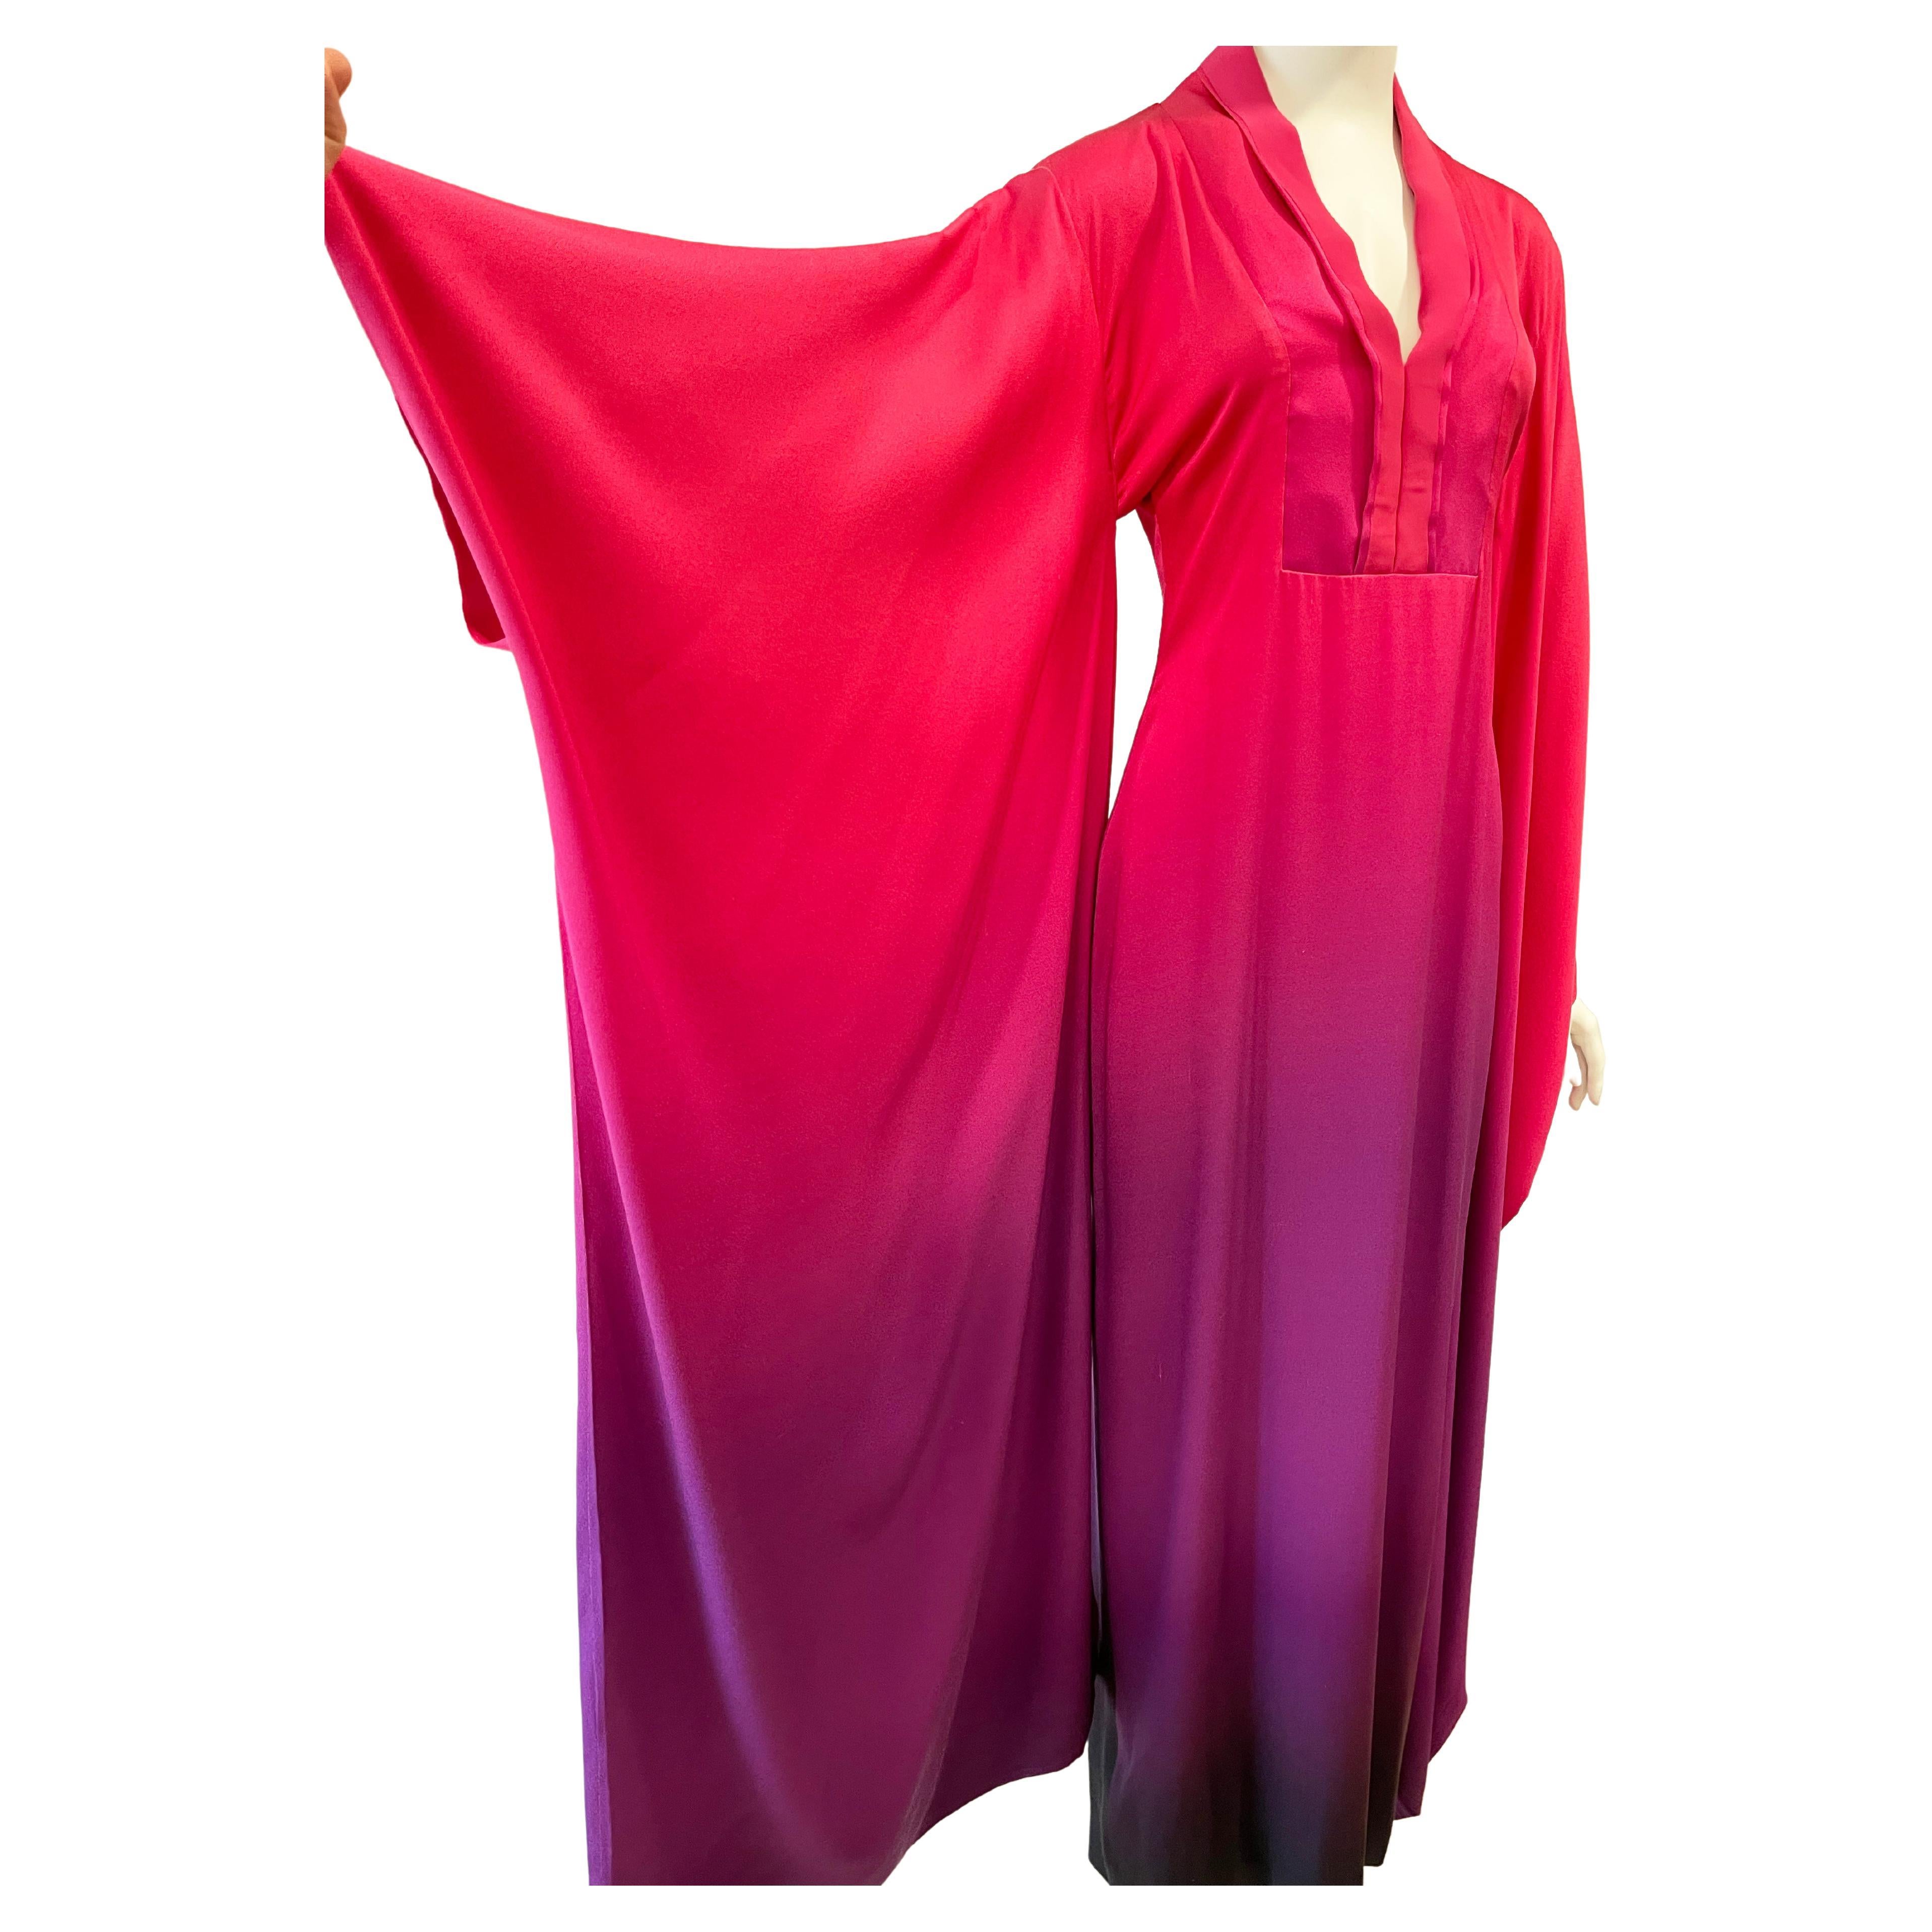 2008 Alexander McQueen Ombre Kimono Gown ' La Dame Bleue'
size S/ US 4 / IT 40
34